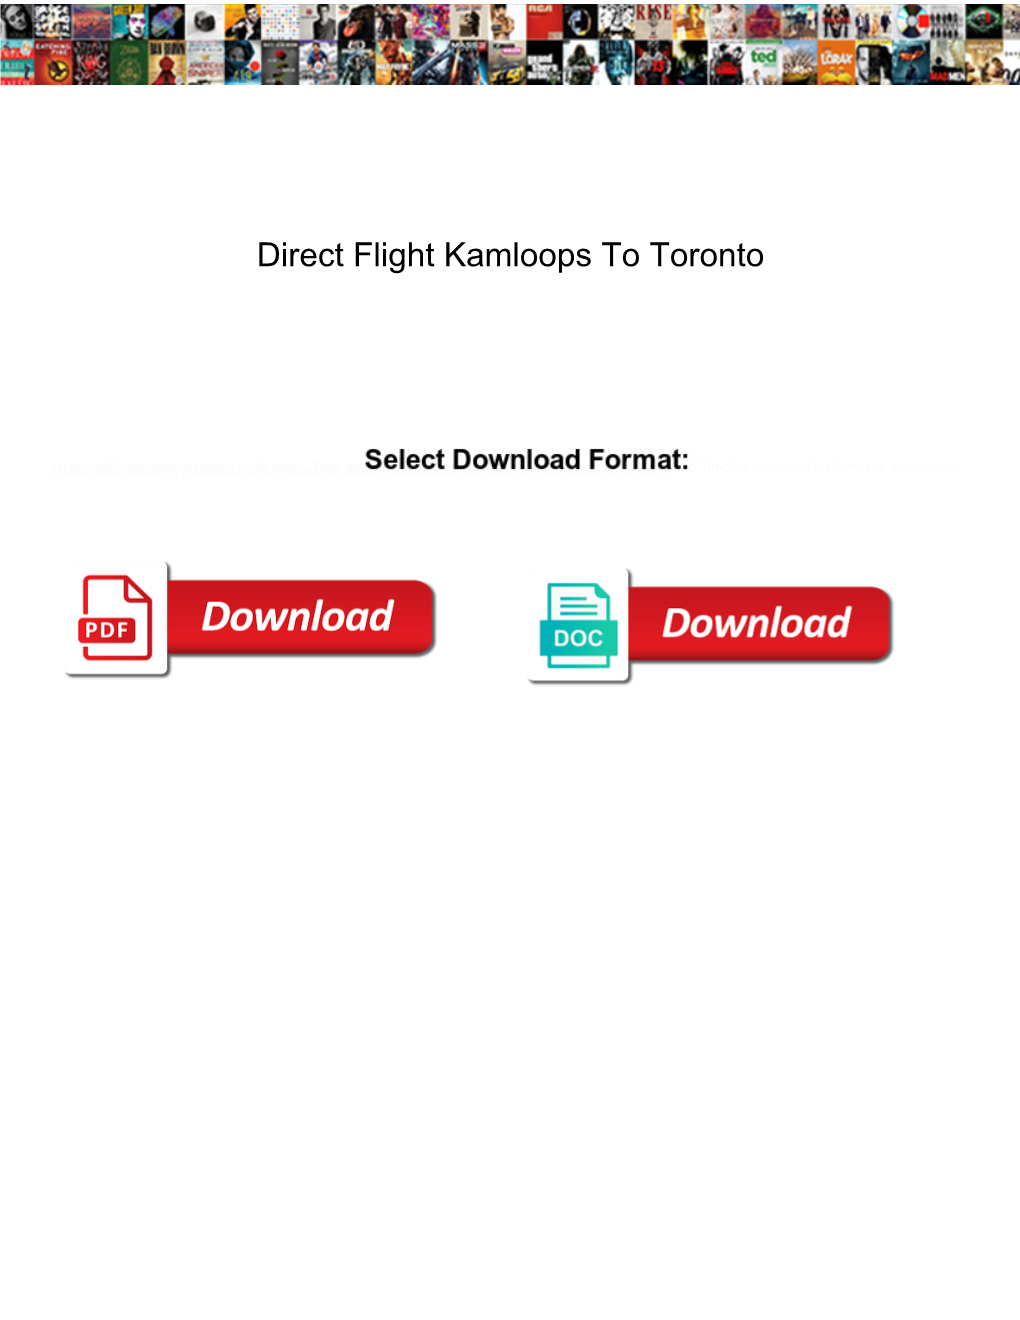 Direct Flight Kamloops to Toronto